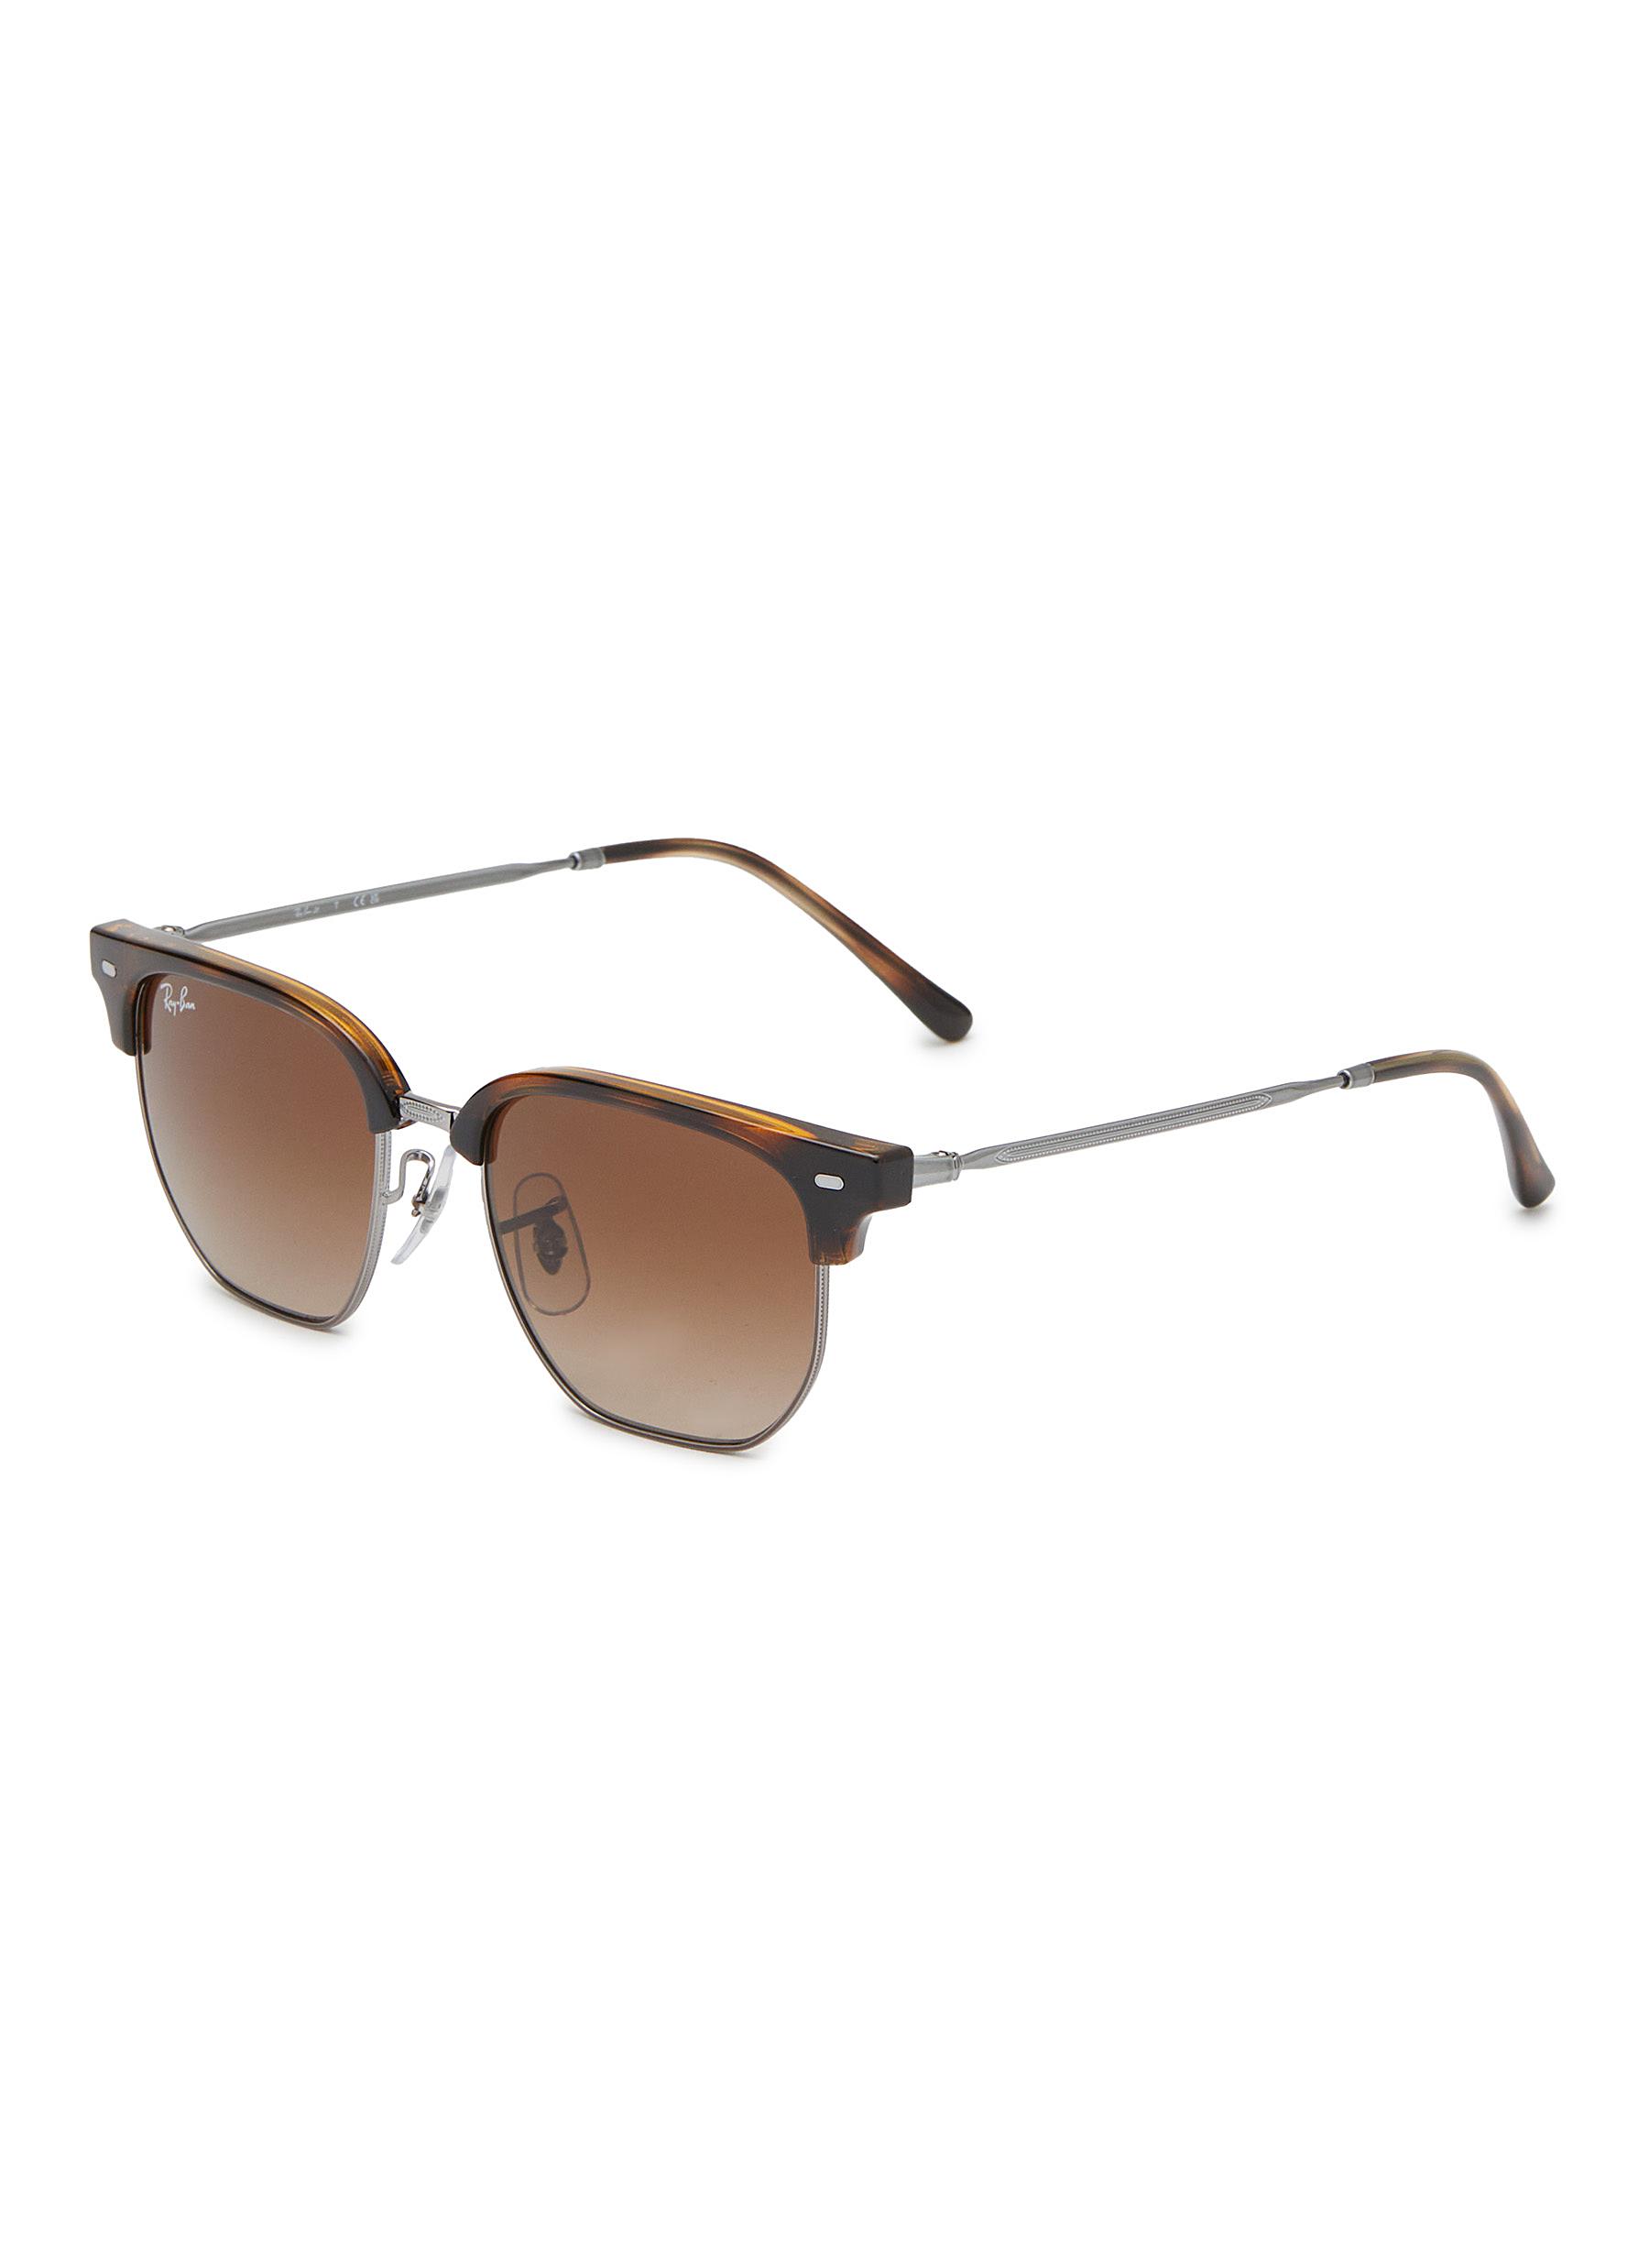 Buy Black Sunglasses for Men by POLAROID Online | Ajio.com